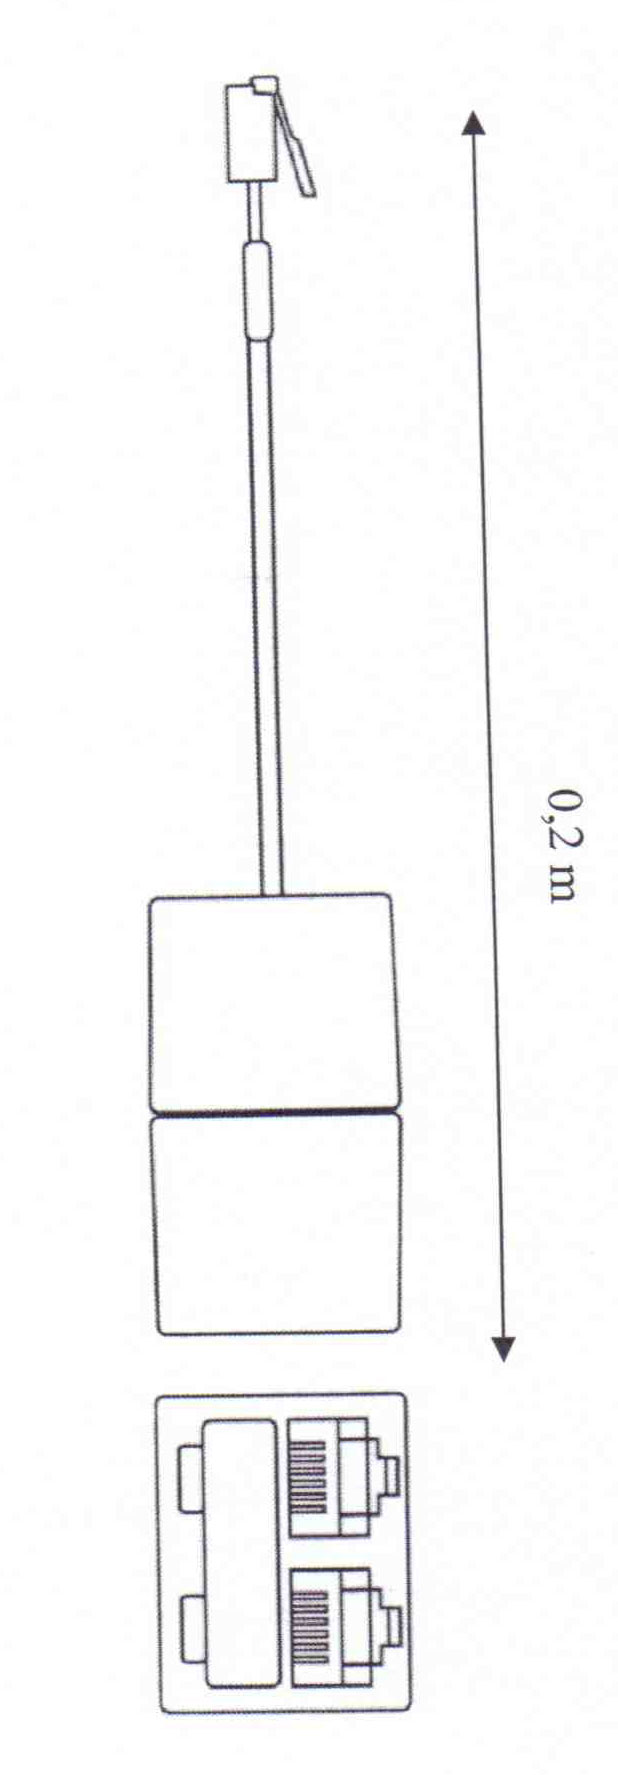 Kabel TK RJ-10 Y-Adapter